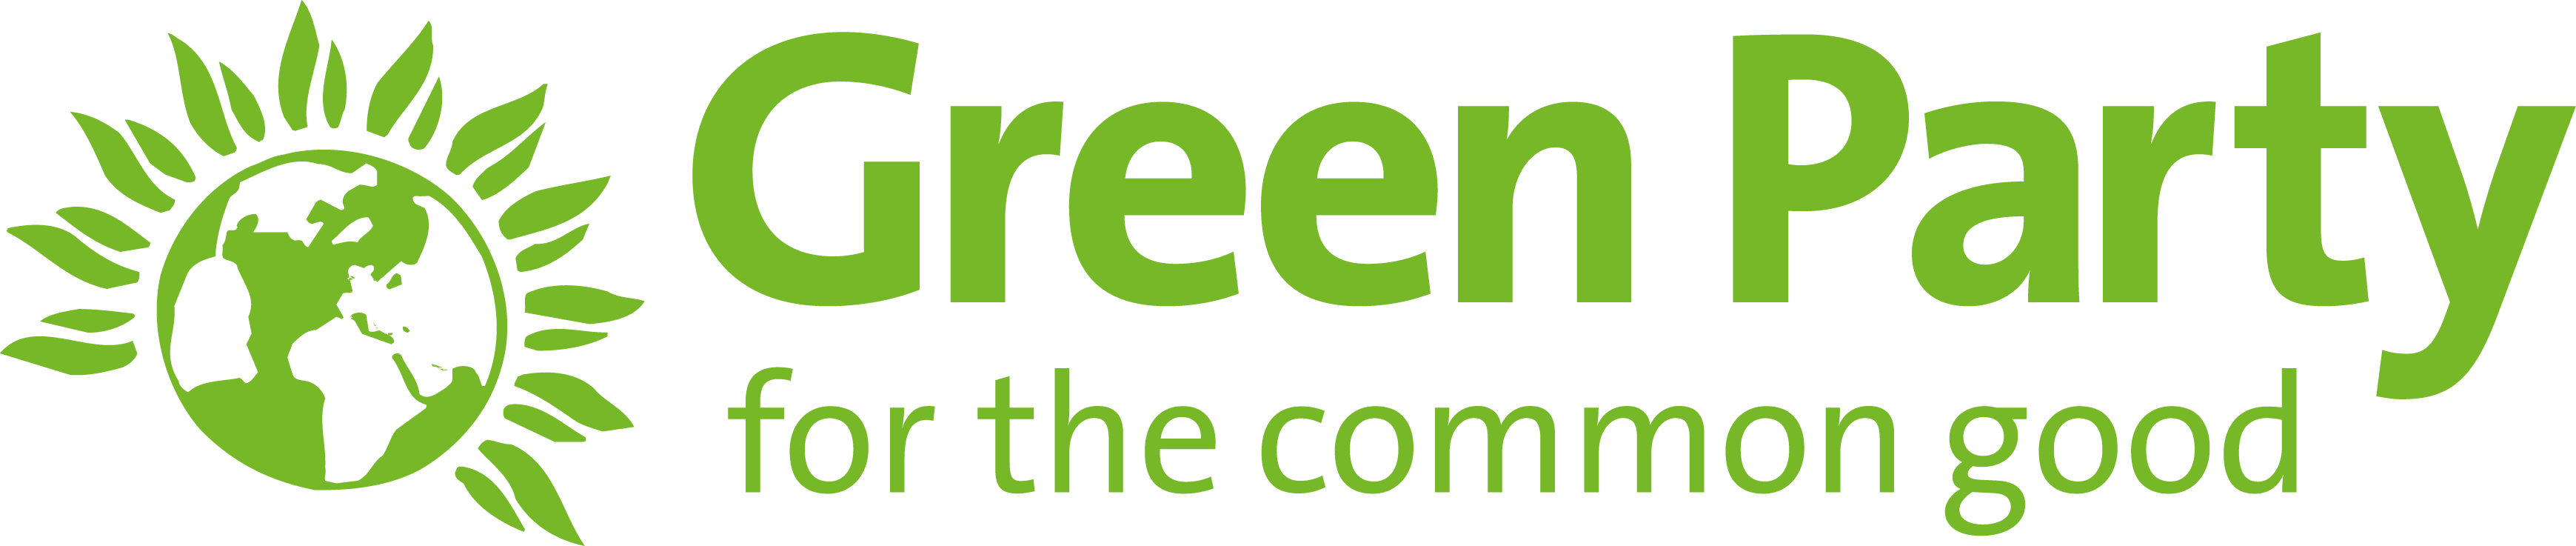 Green Banner Logo - Green Party Visual Identity